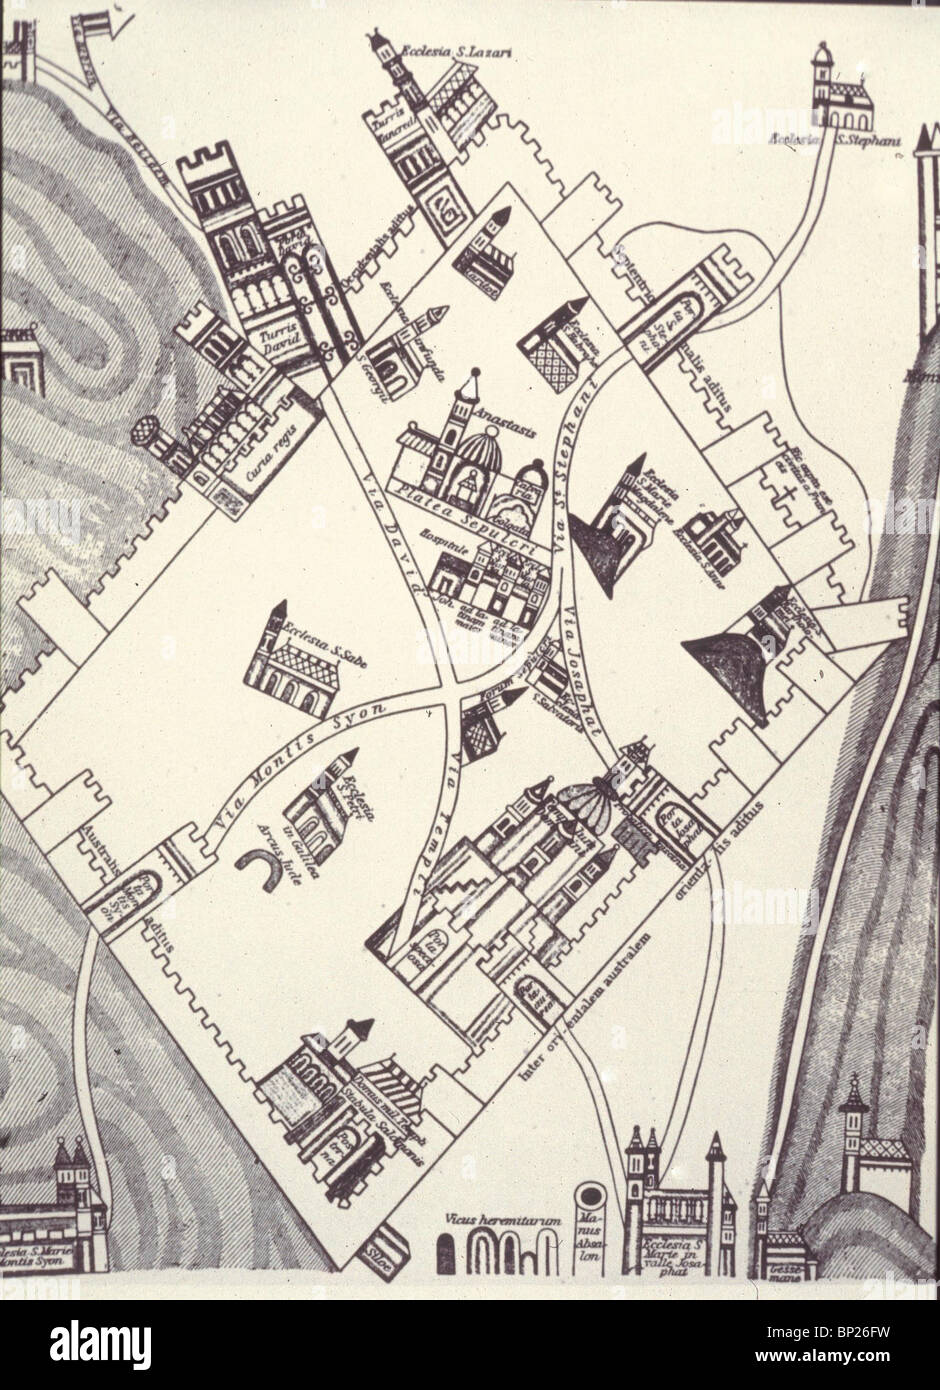 1070. Mappa SCEMATICAL crociato di Gerusalemme, 1150 Foto Stock